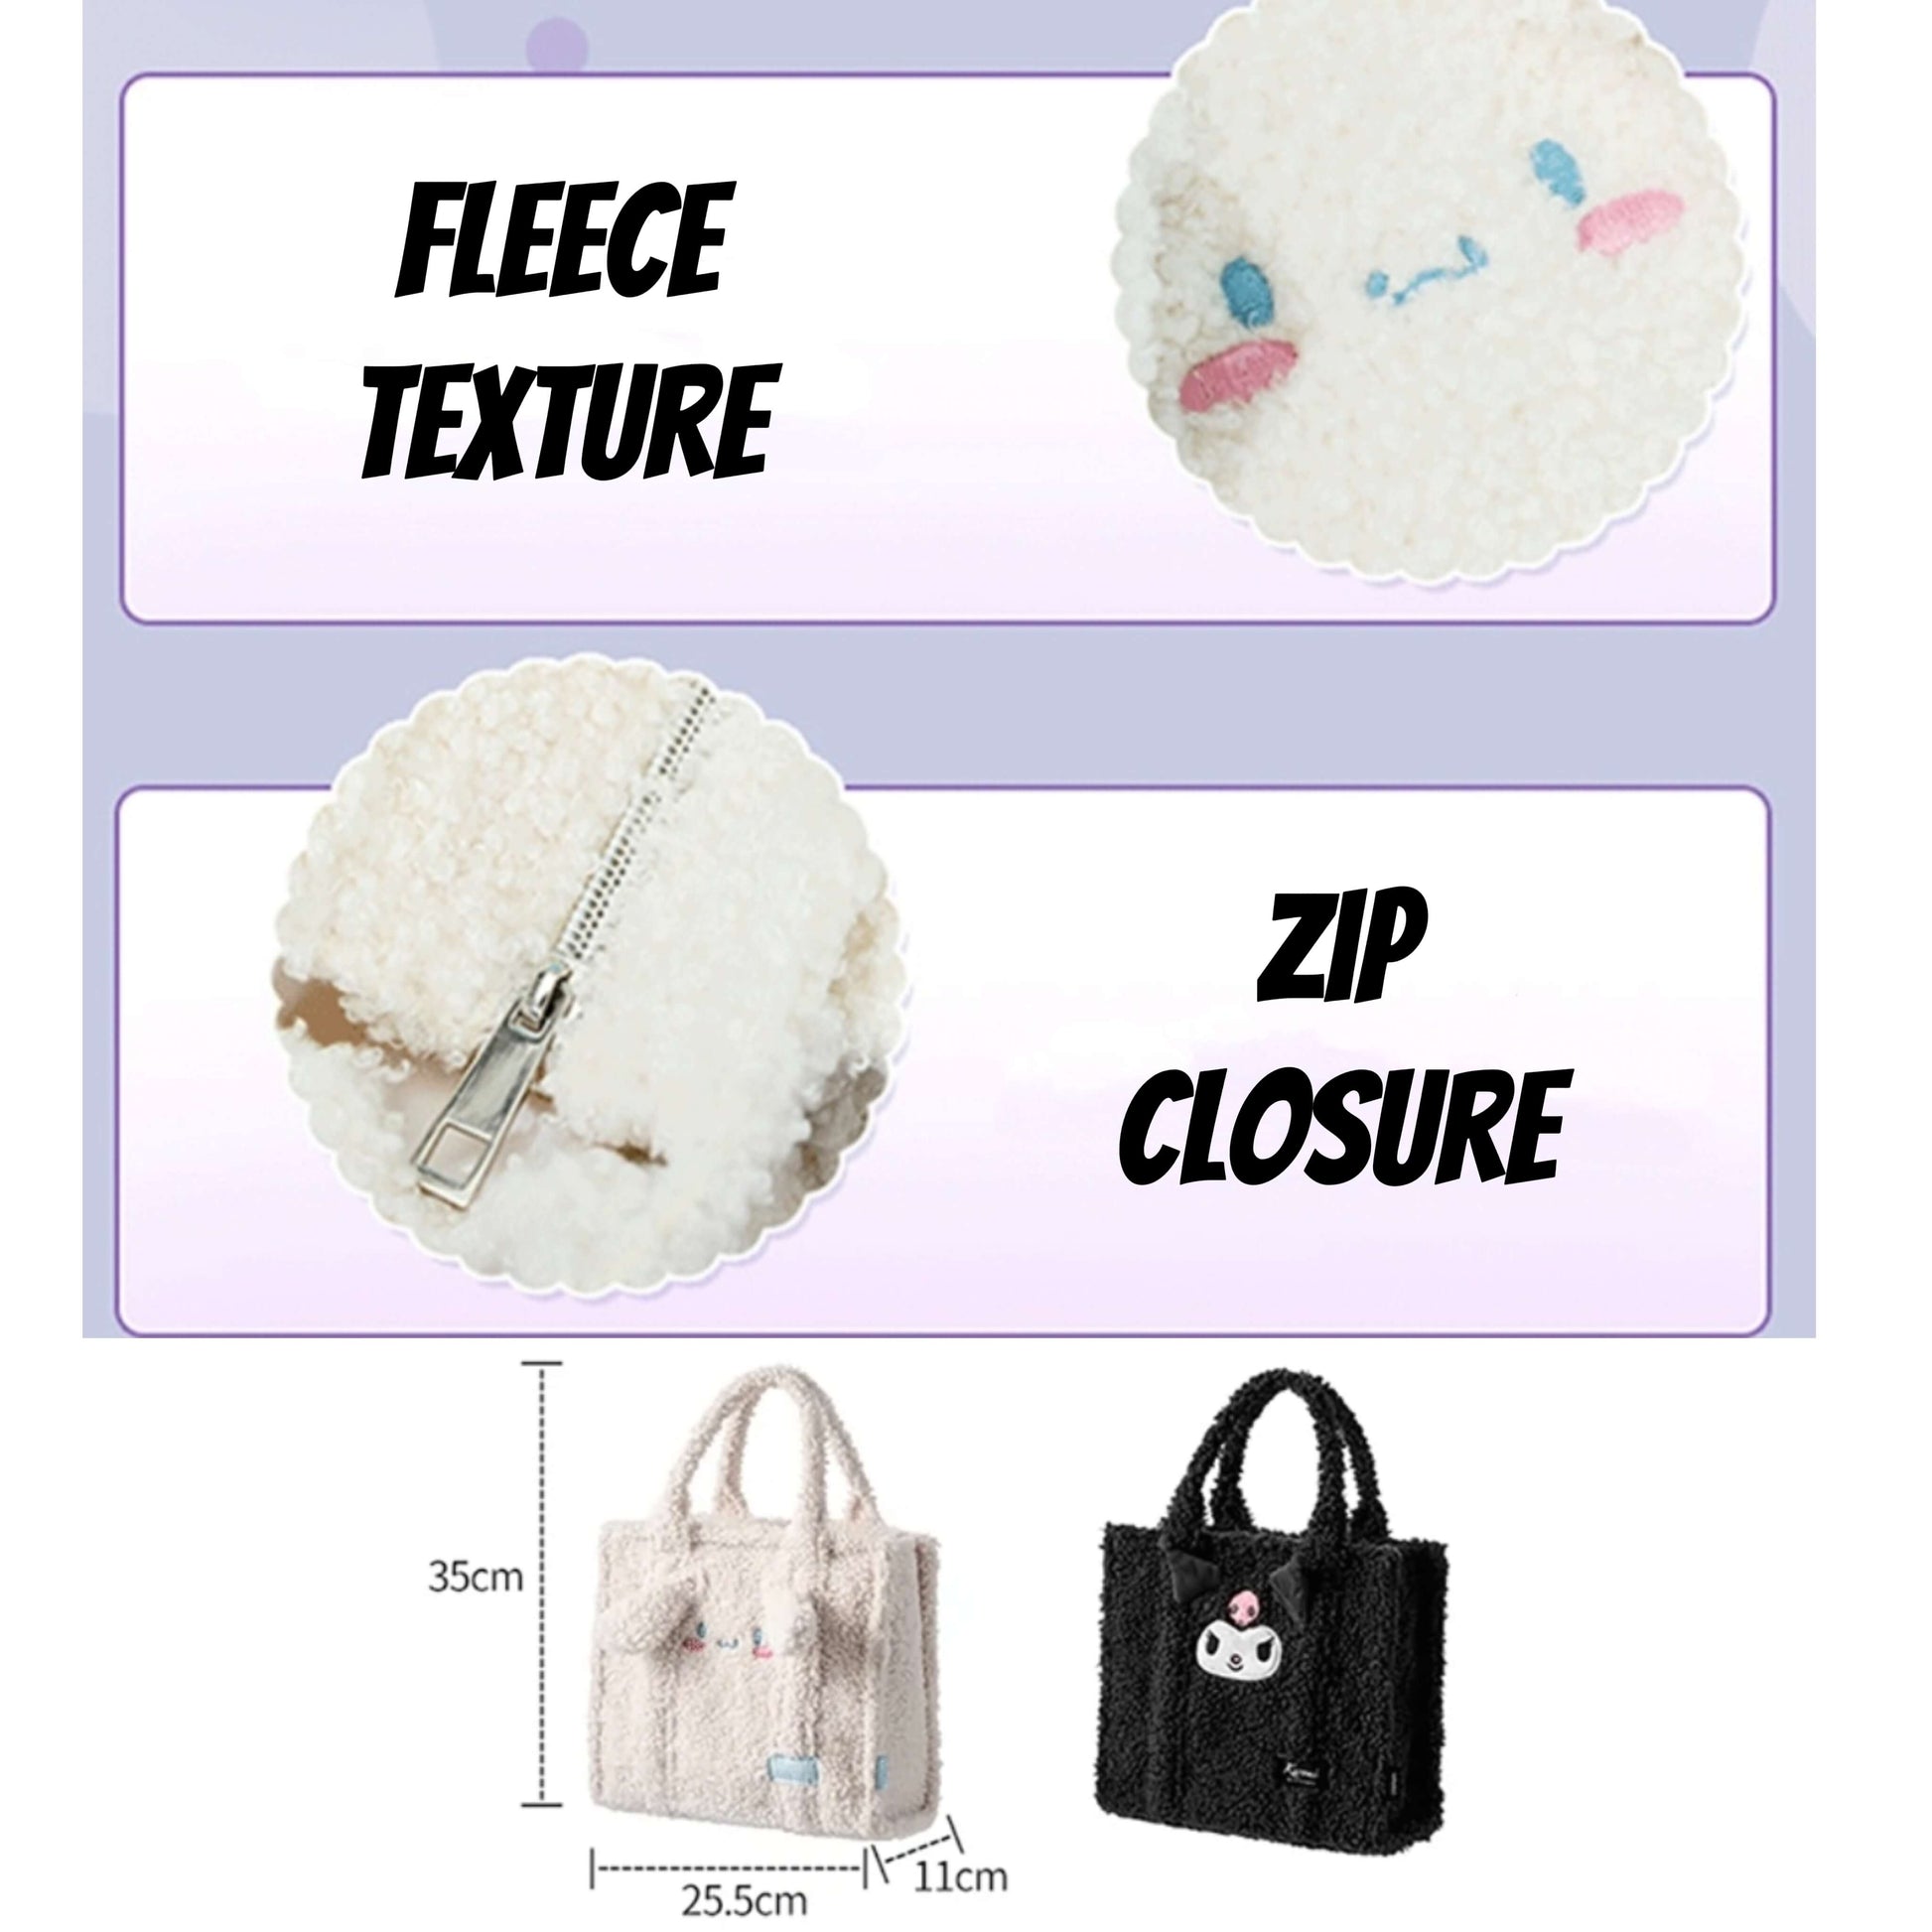 the zipper closure of the cute fleece bags close up